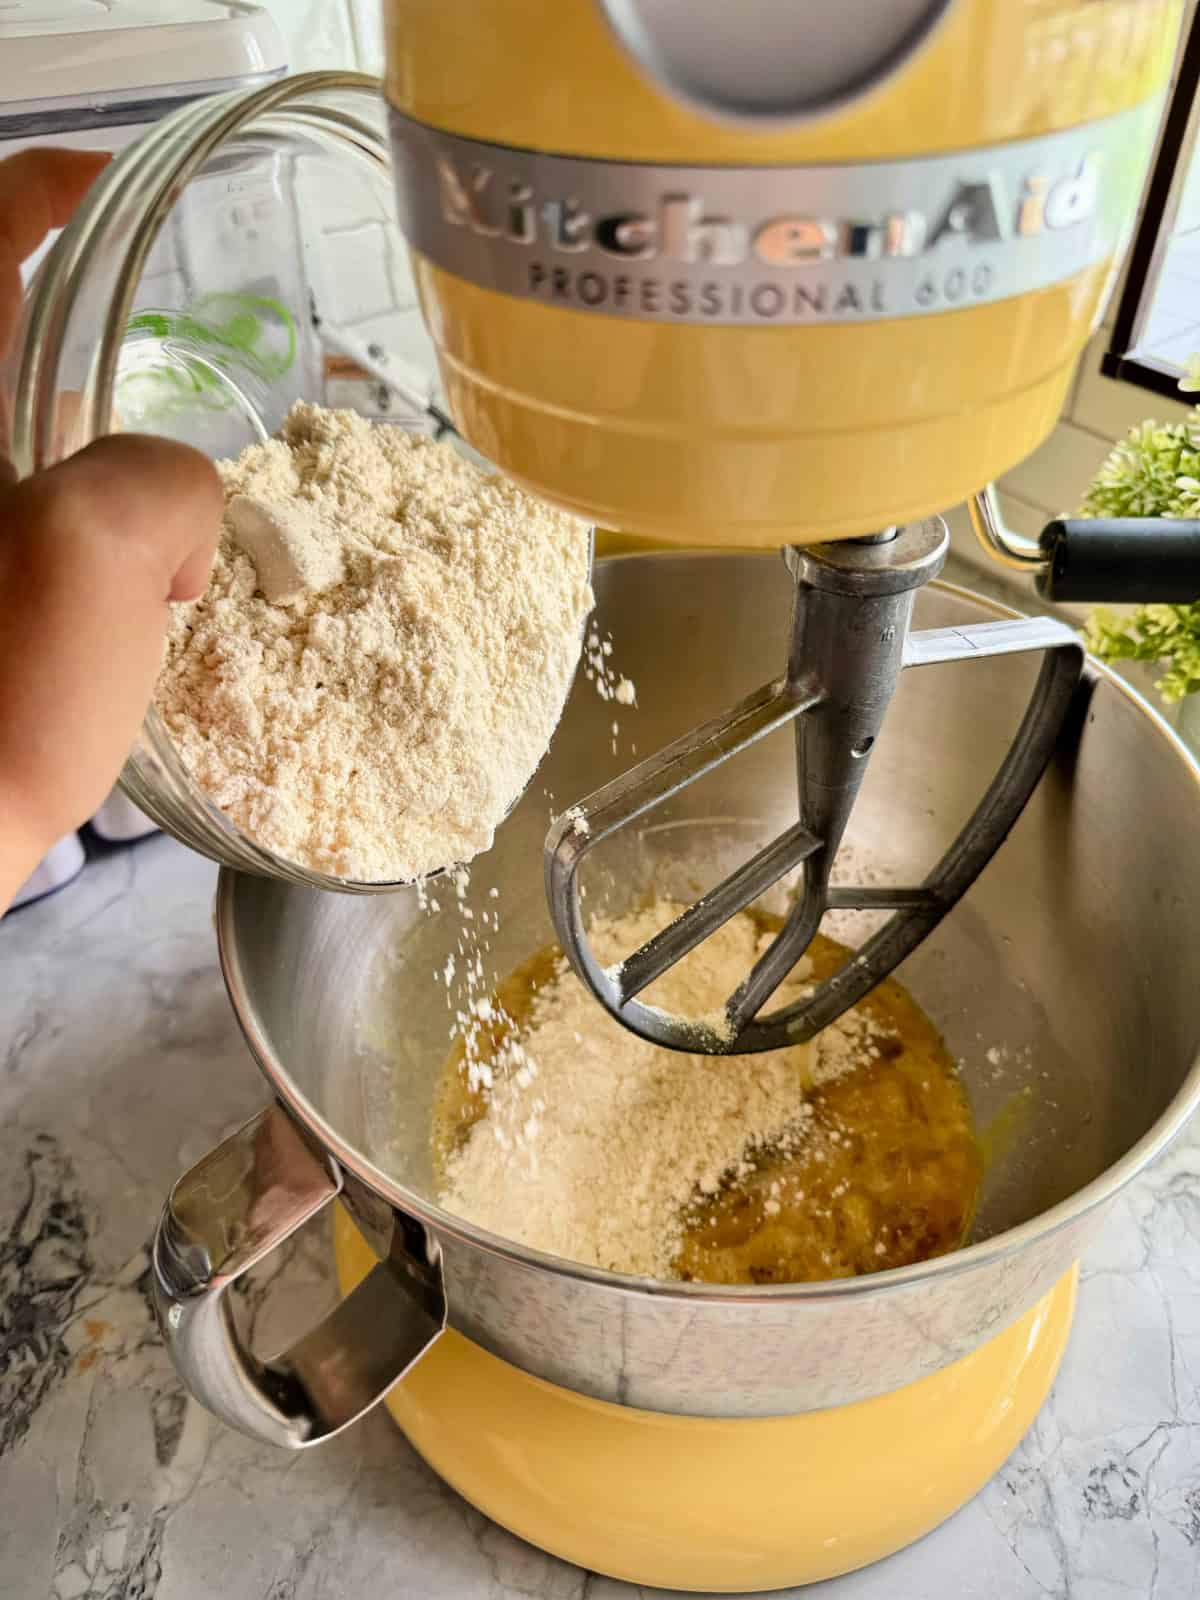 Hand pouring almond flour into a yellow KitchenAid stand mixer.